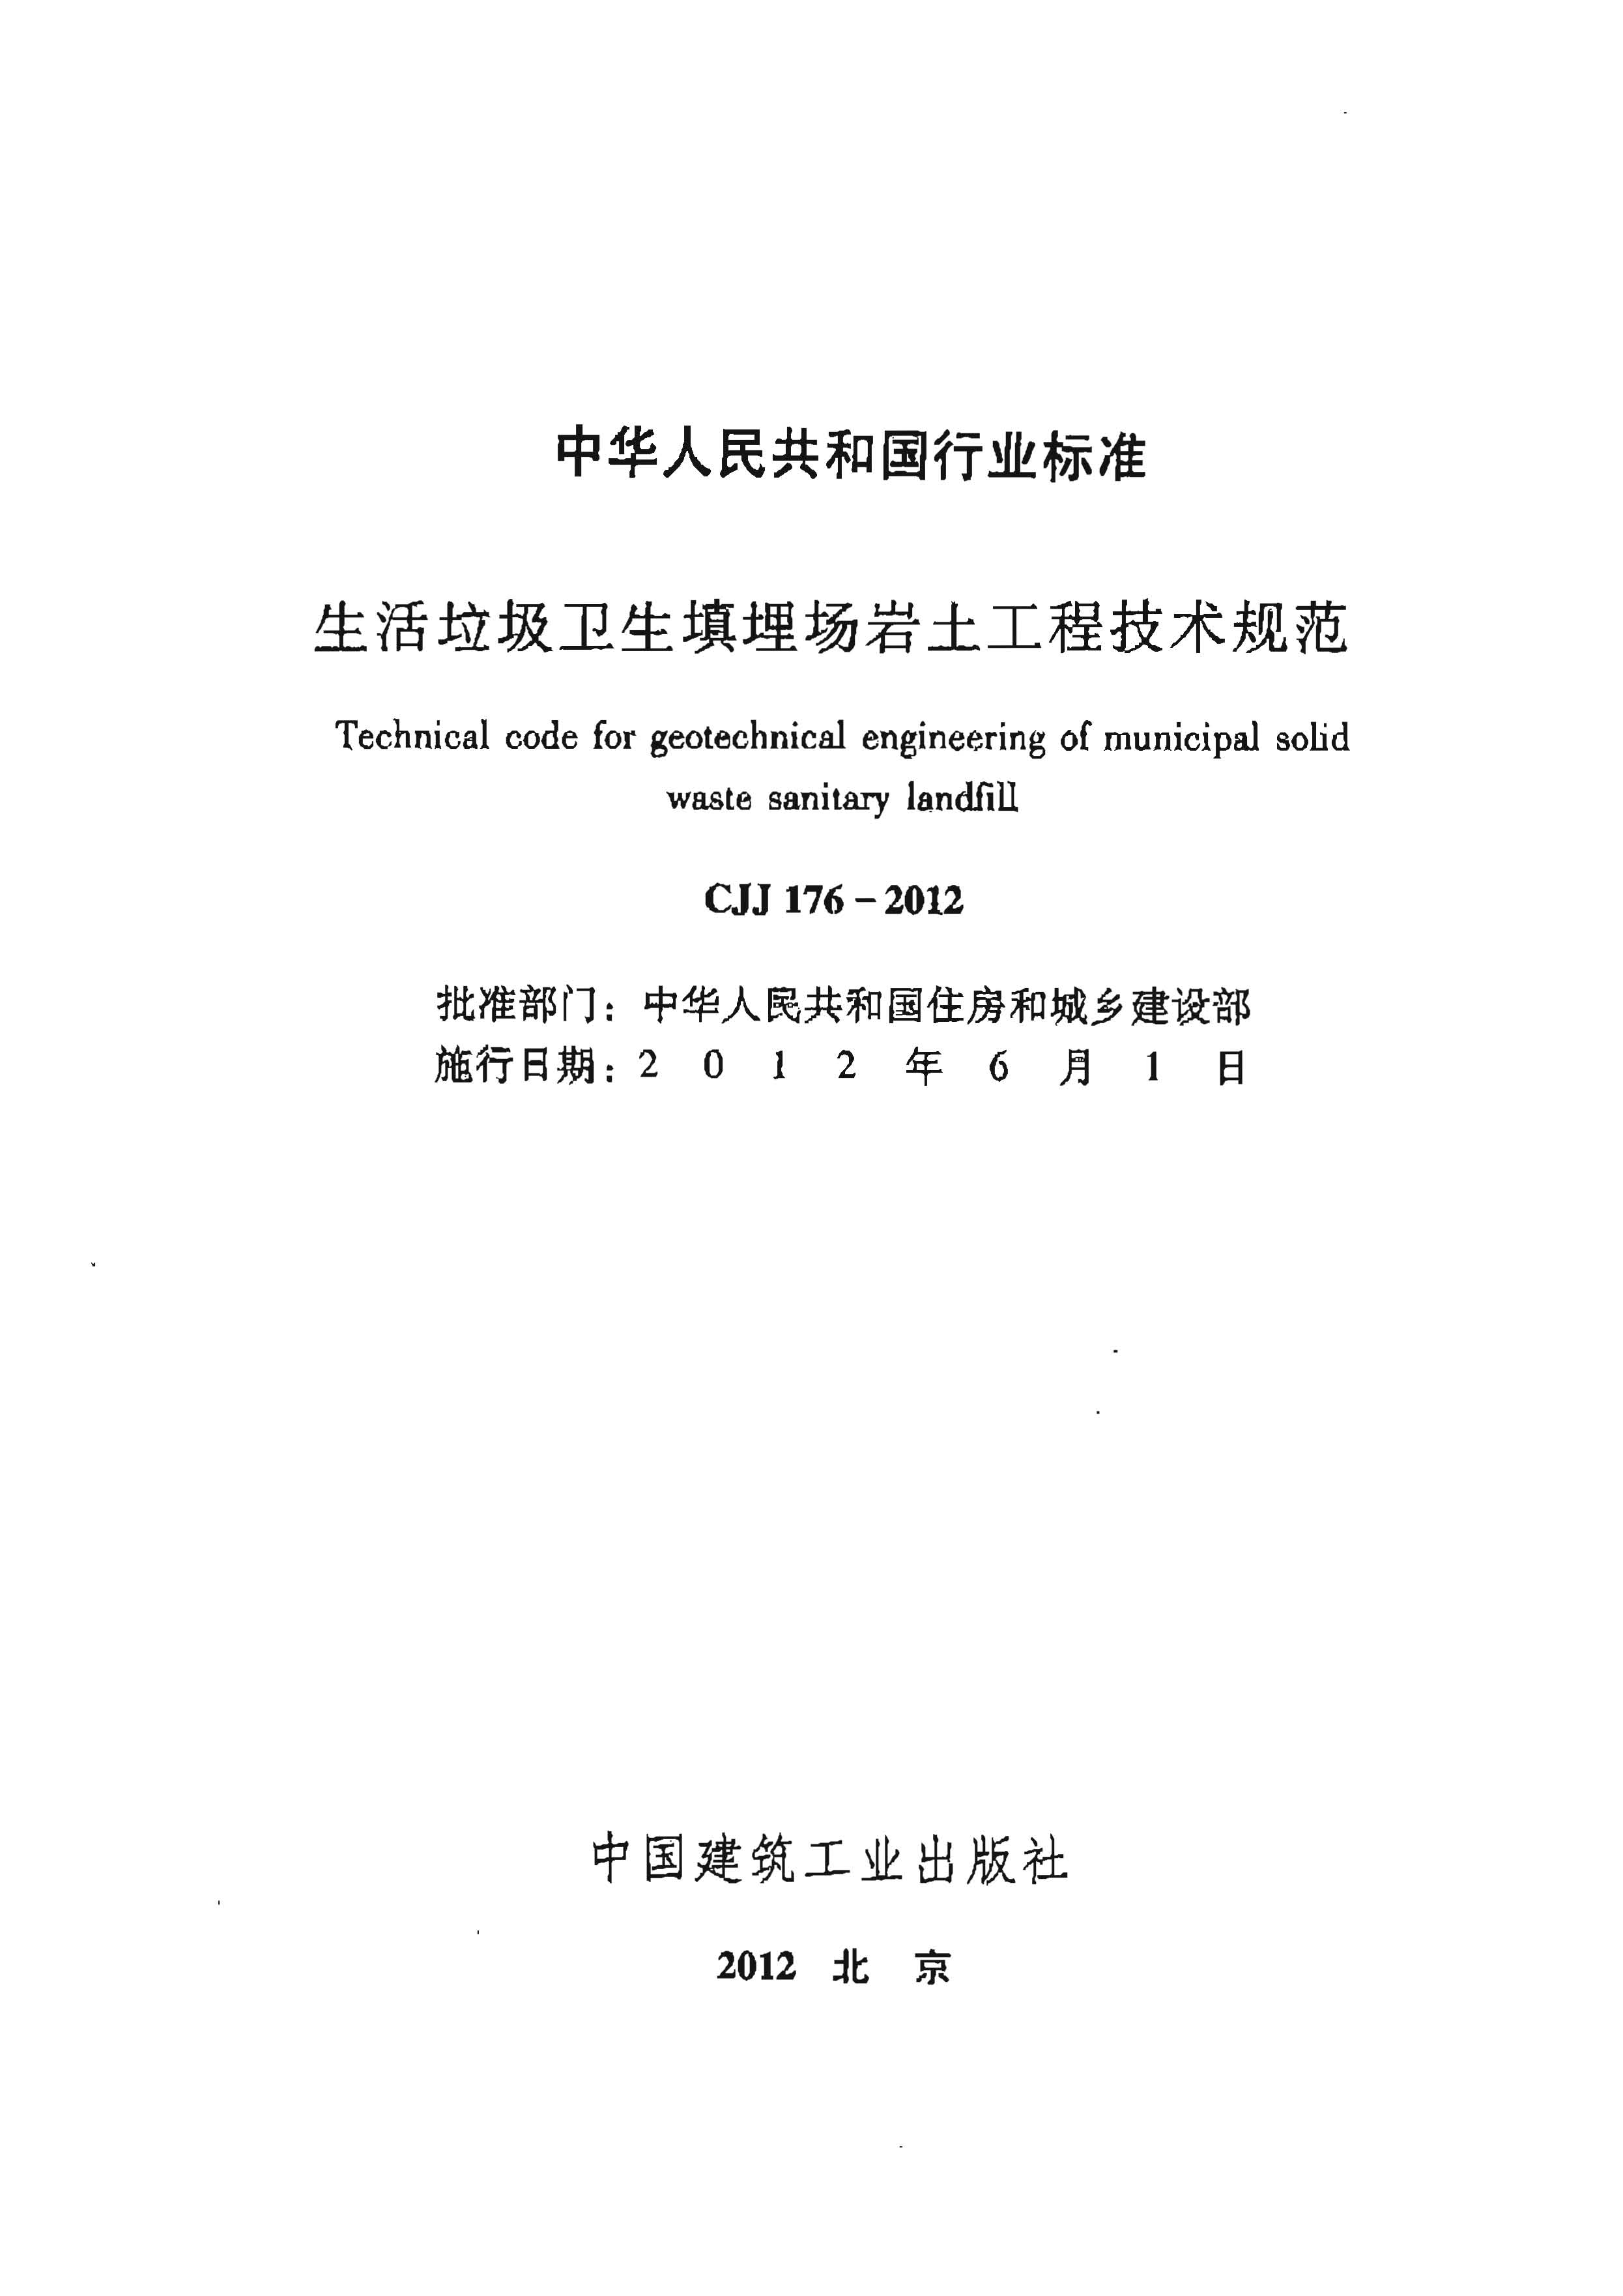 CJJ 176-2012 生活垃圾衛生填埋場巖土工程技術規范